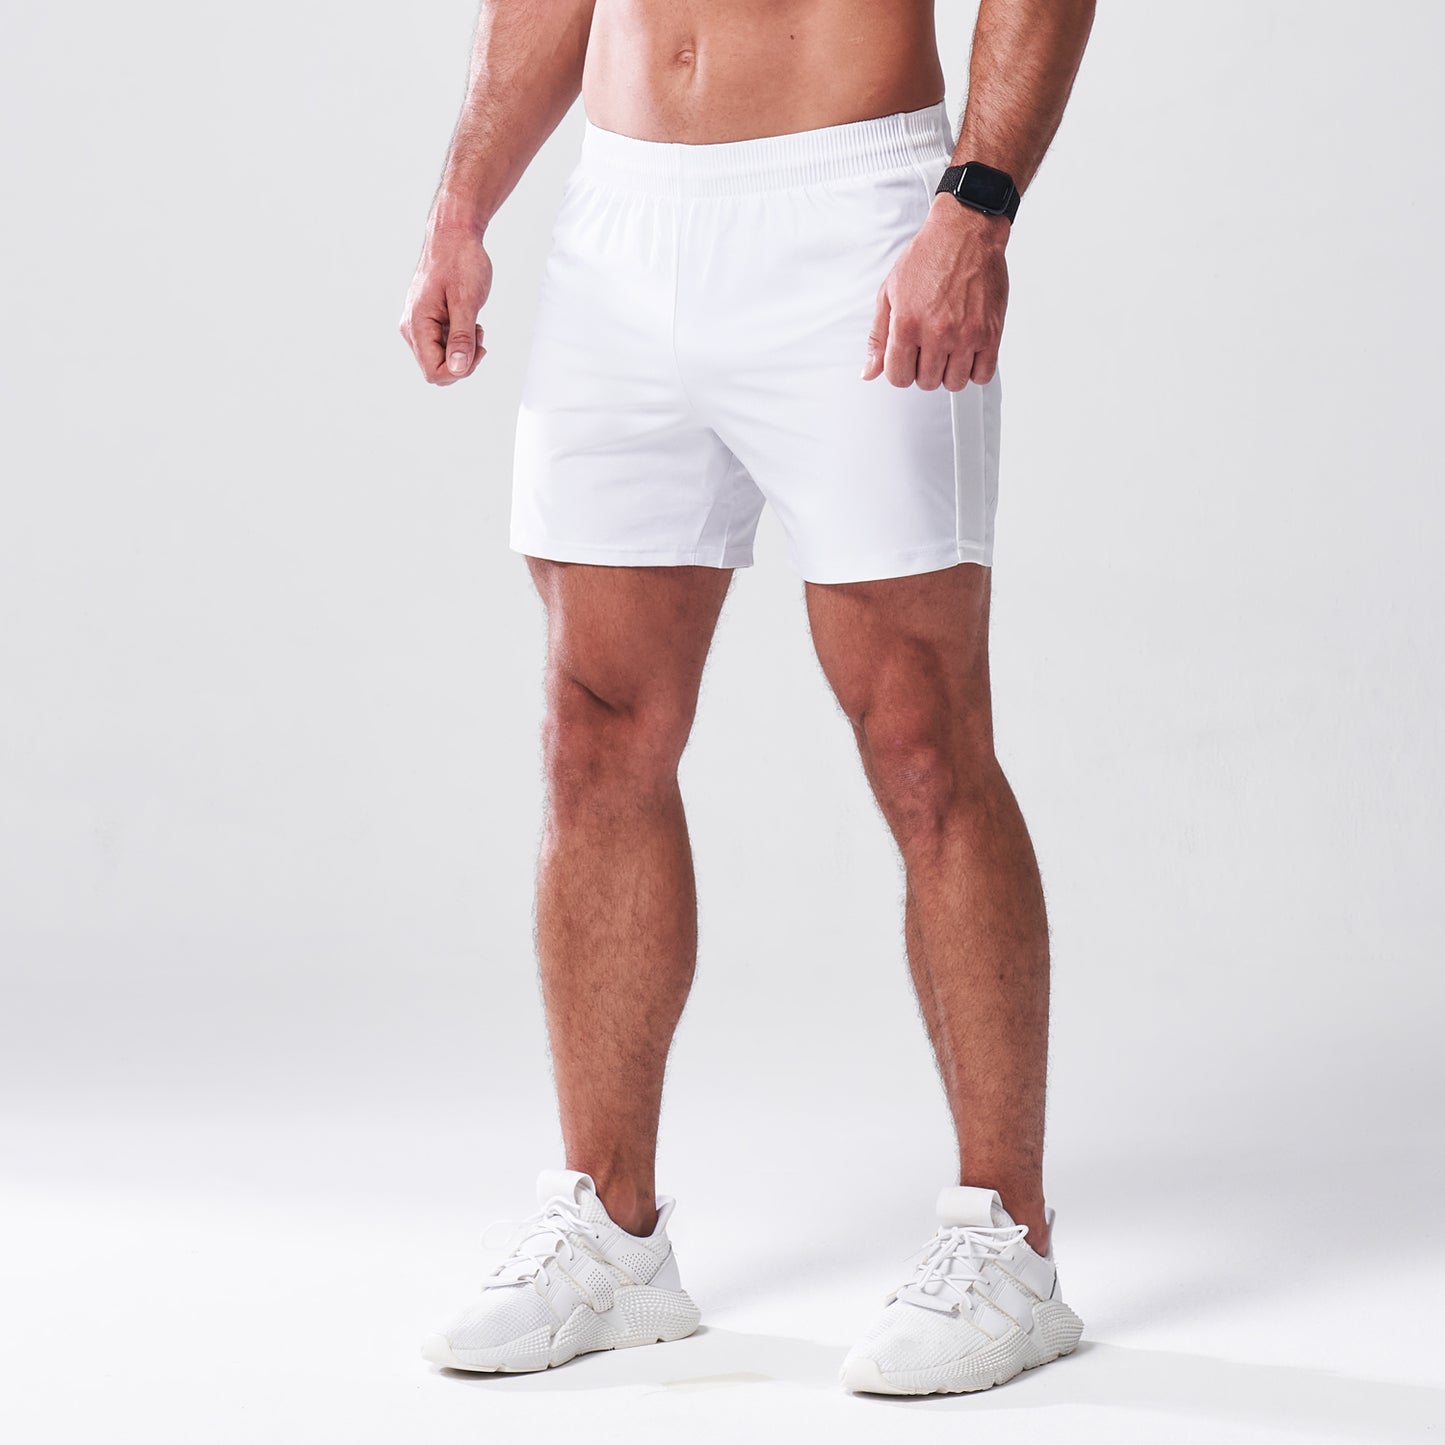 squatwolf-gym-wear-lab360-5-impact-shorts-white-workout-short-for-men